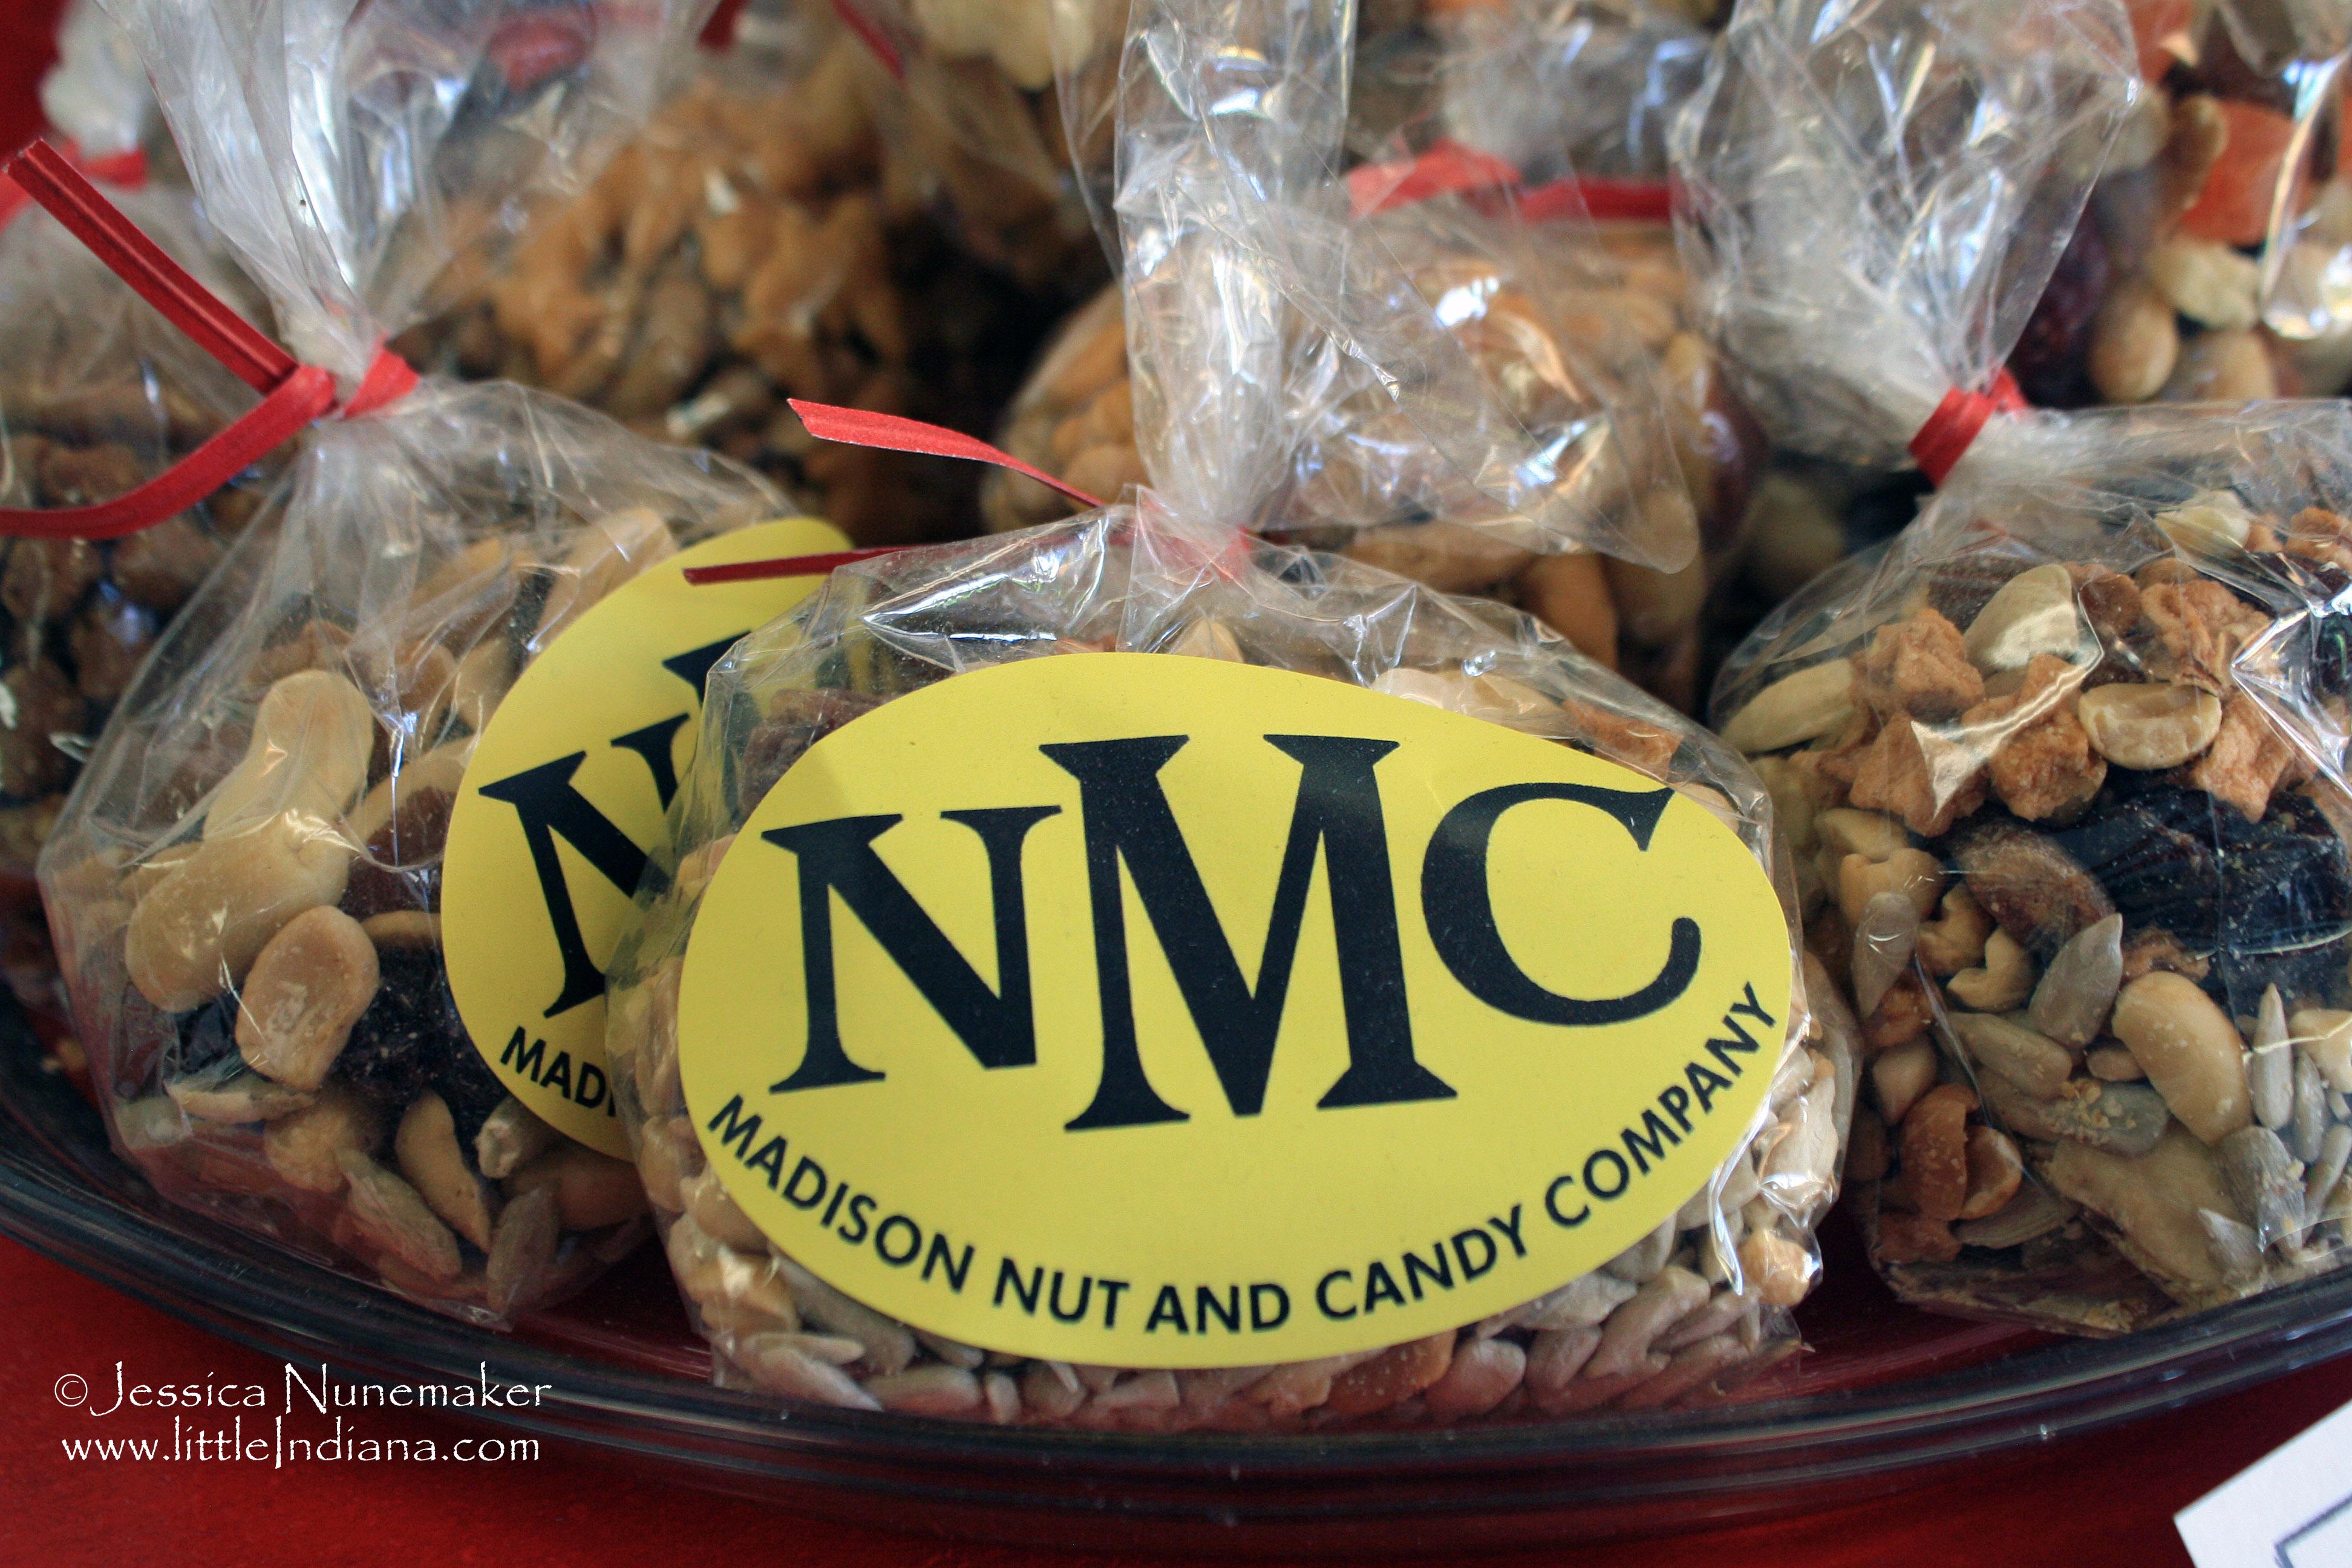 Madison, Indiana: Madison Nut and Candy Company